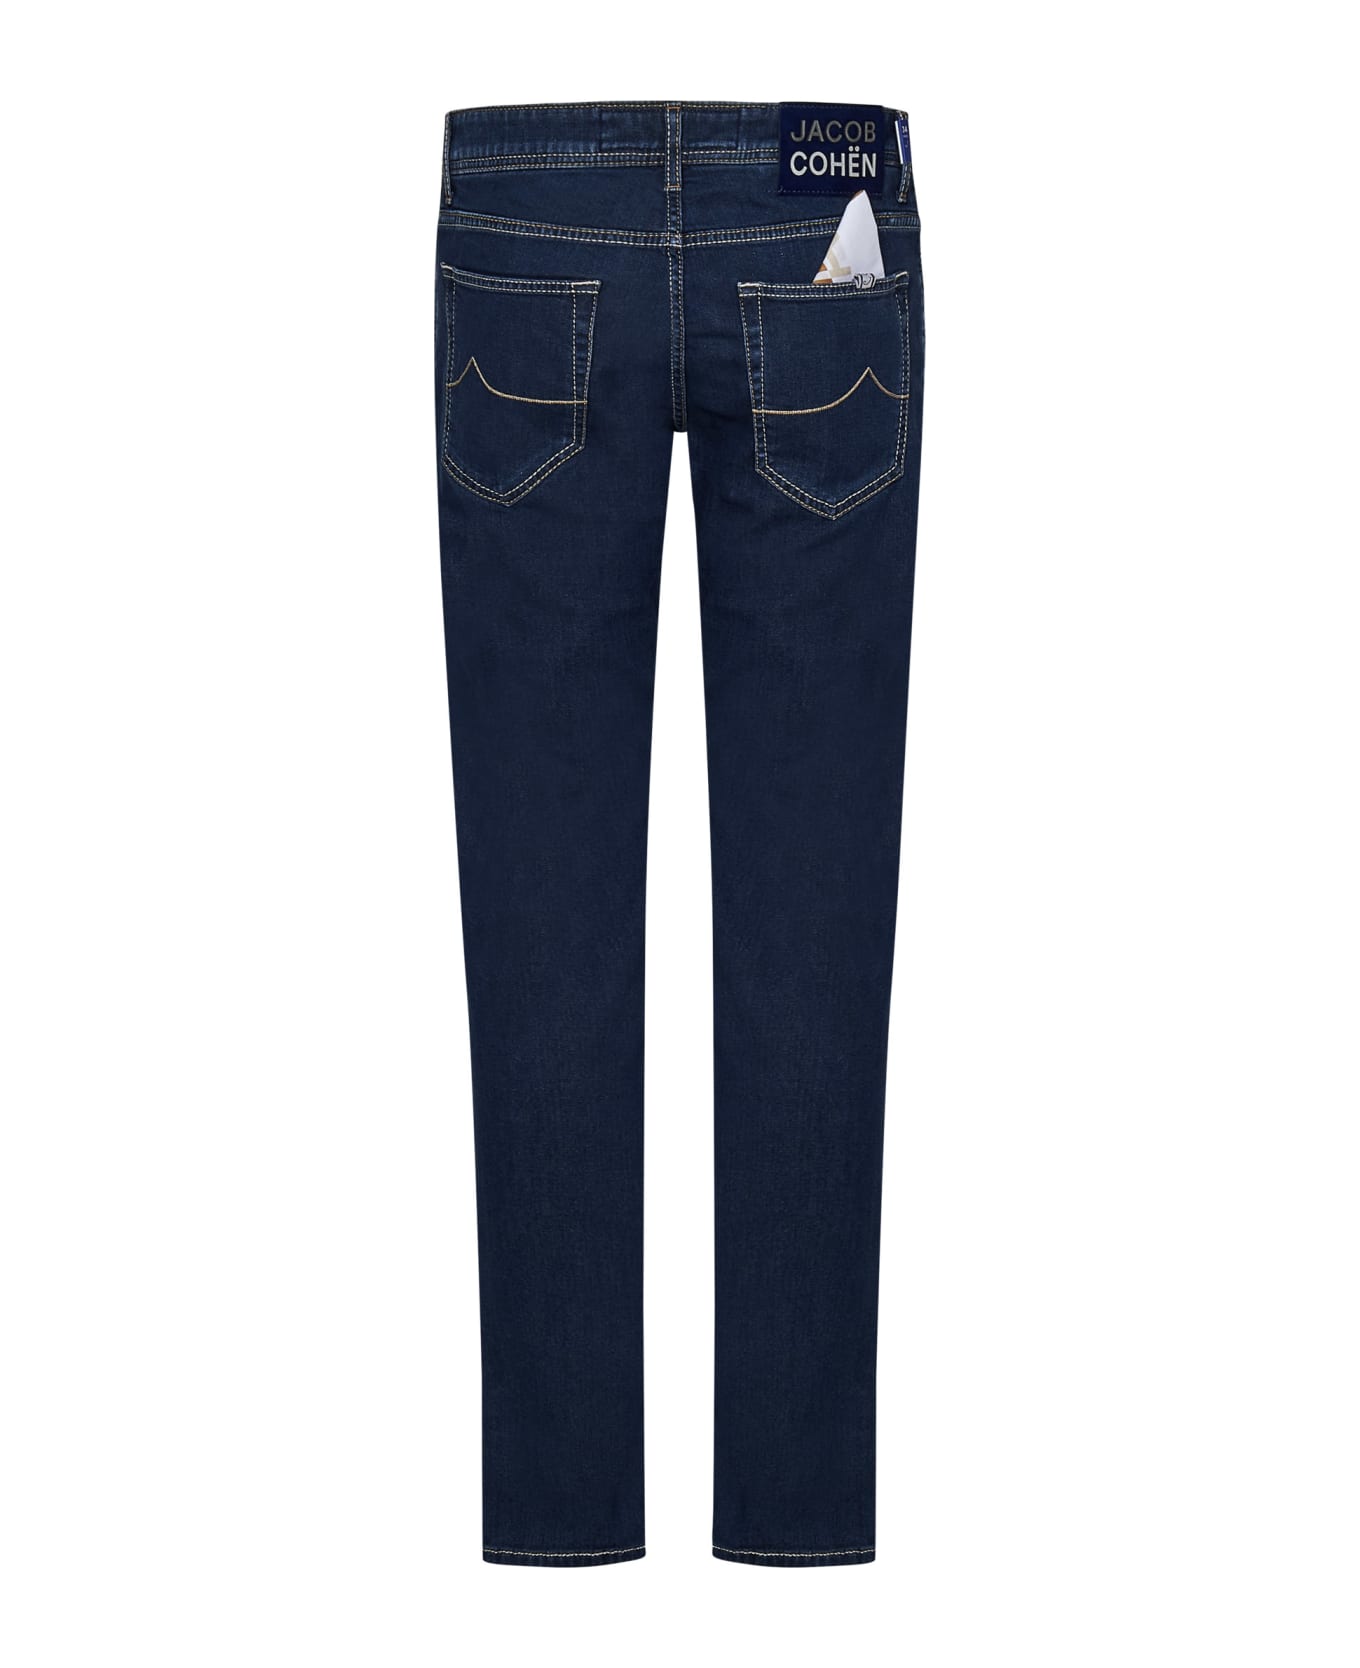 Jacob Cohen Nick Slim Jeans Jeans - BLU デニム